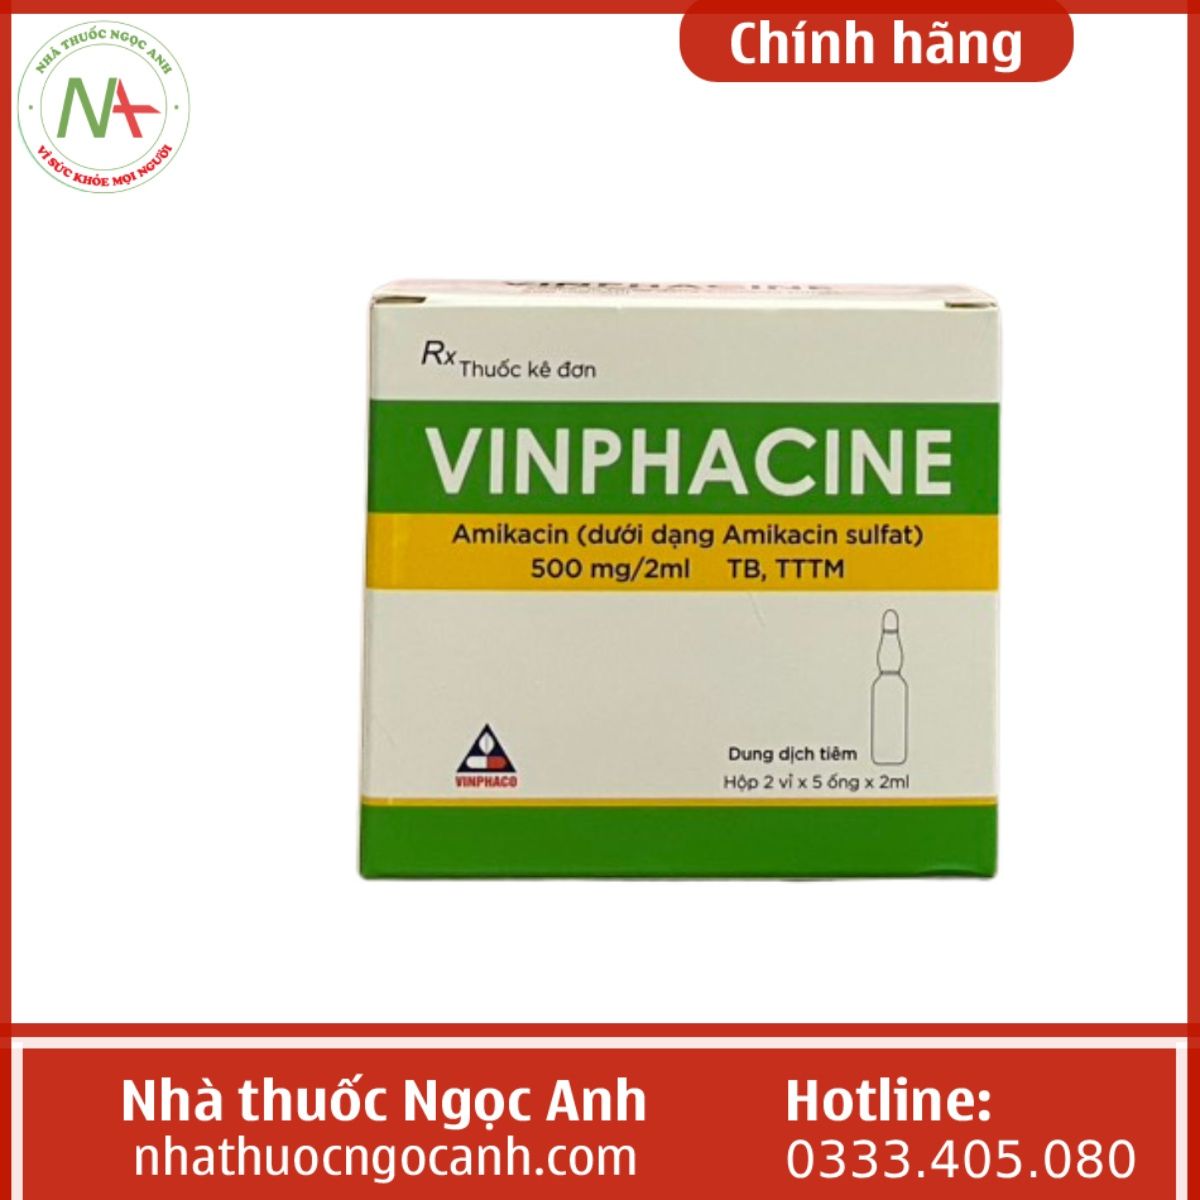 Vinphacine 500mg/2ml